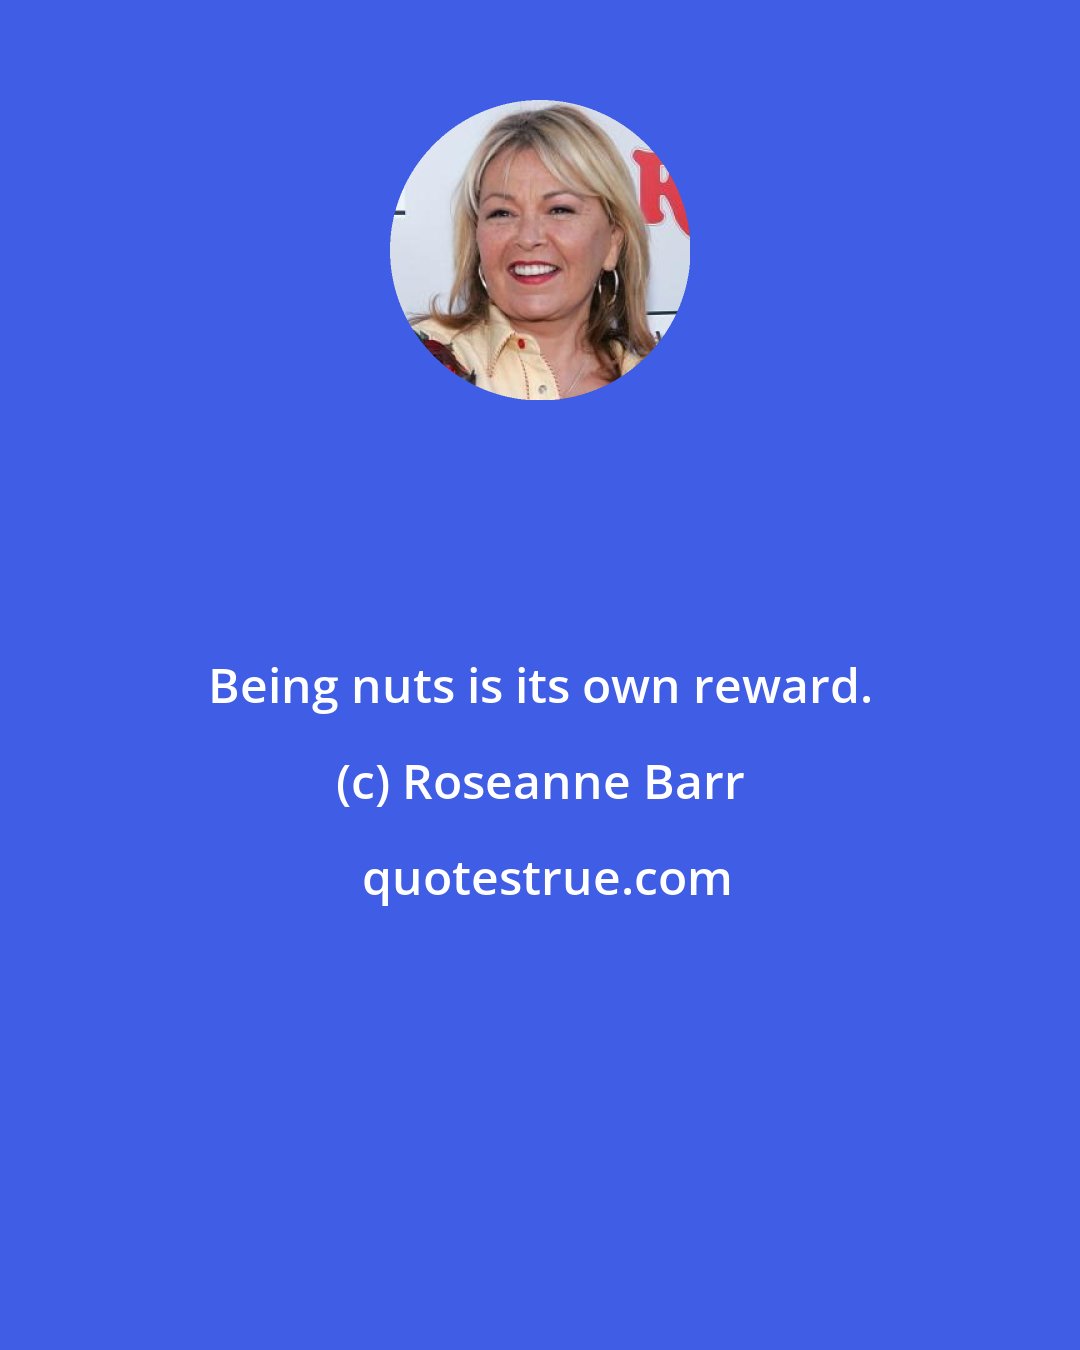 Roseanne Barr: Being nuts is its own reward.